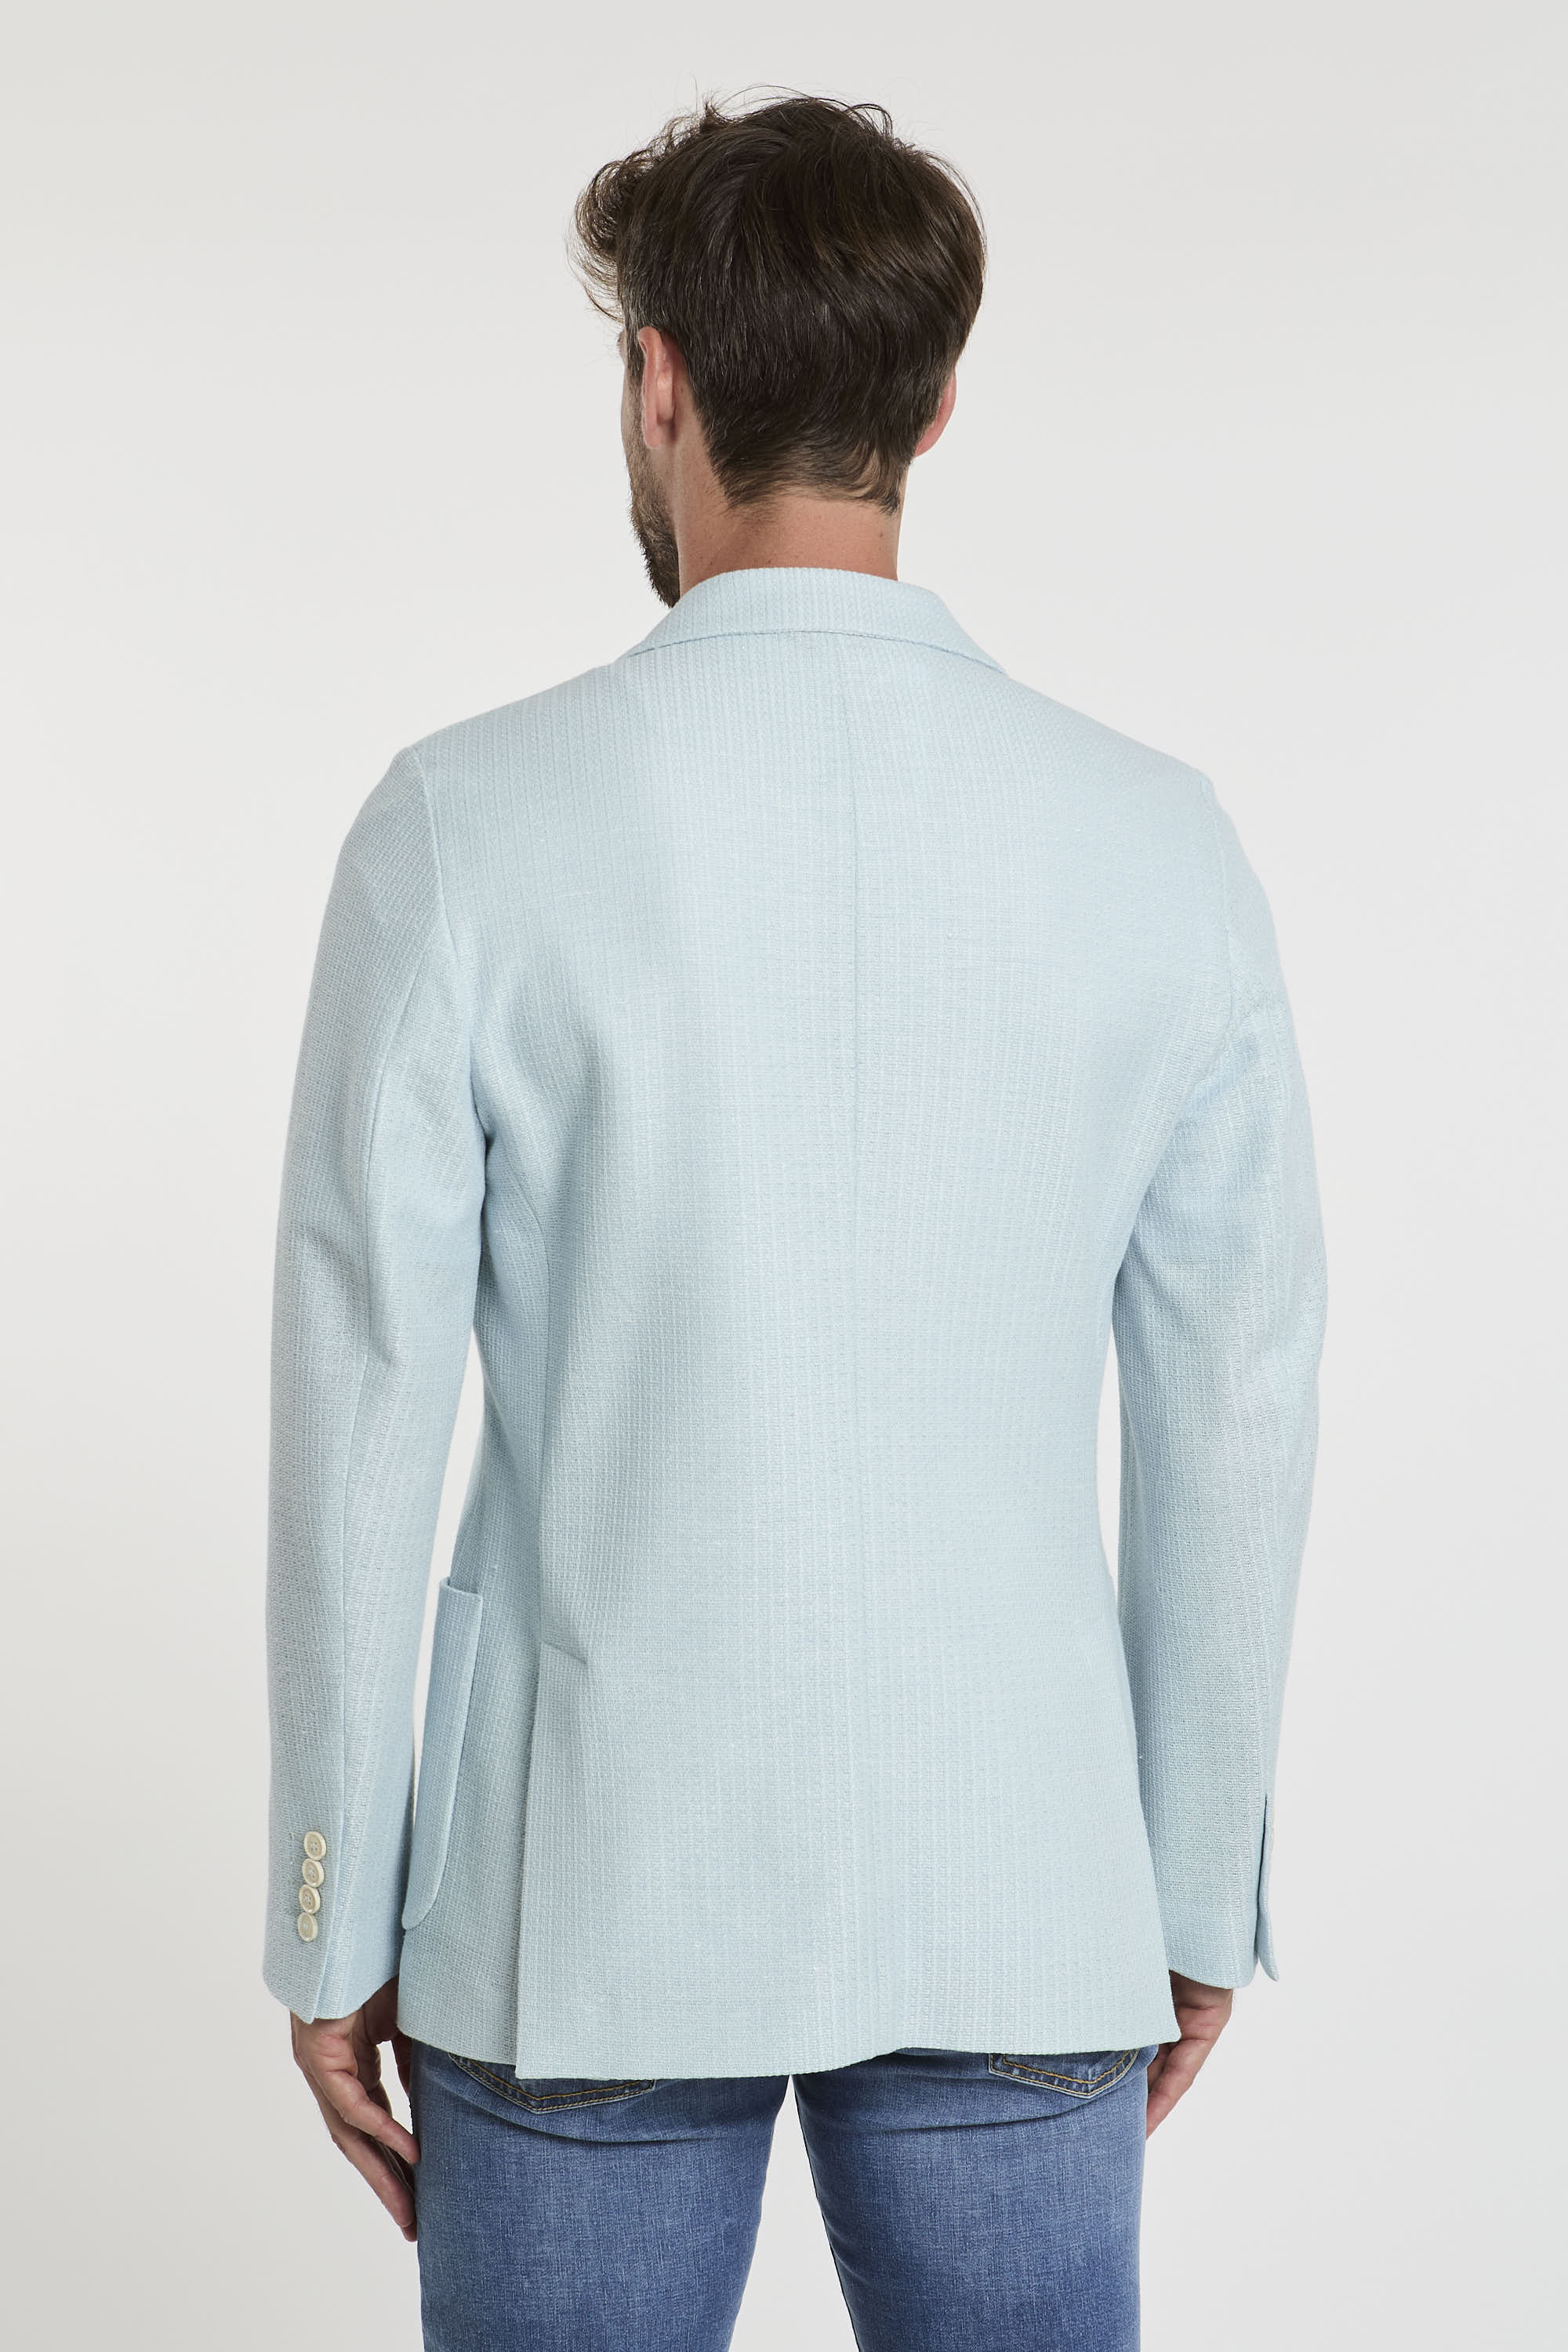 Circolo 1901 Cotton and Linen Blend Jacket Blue-7